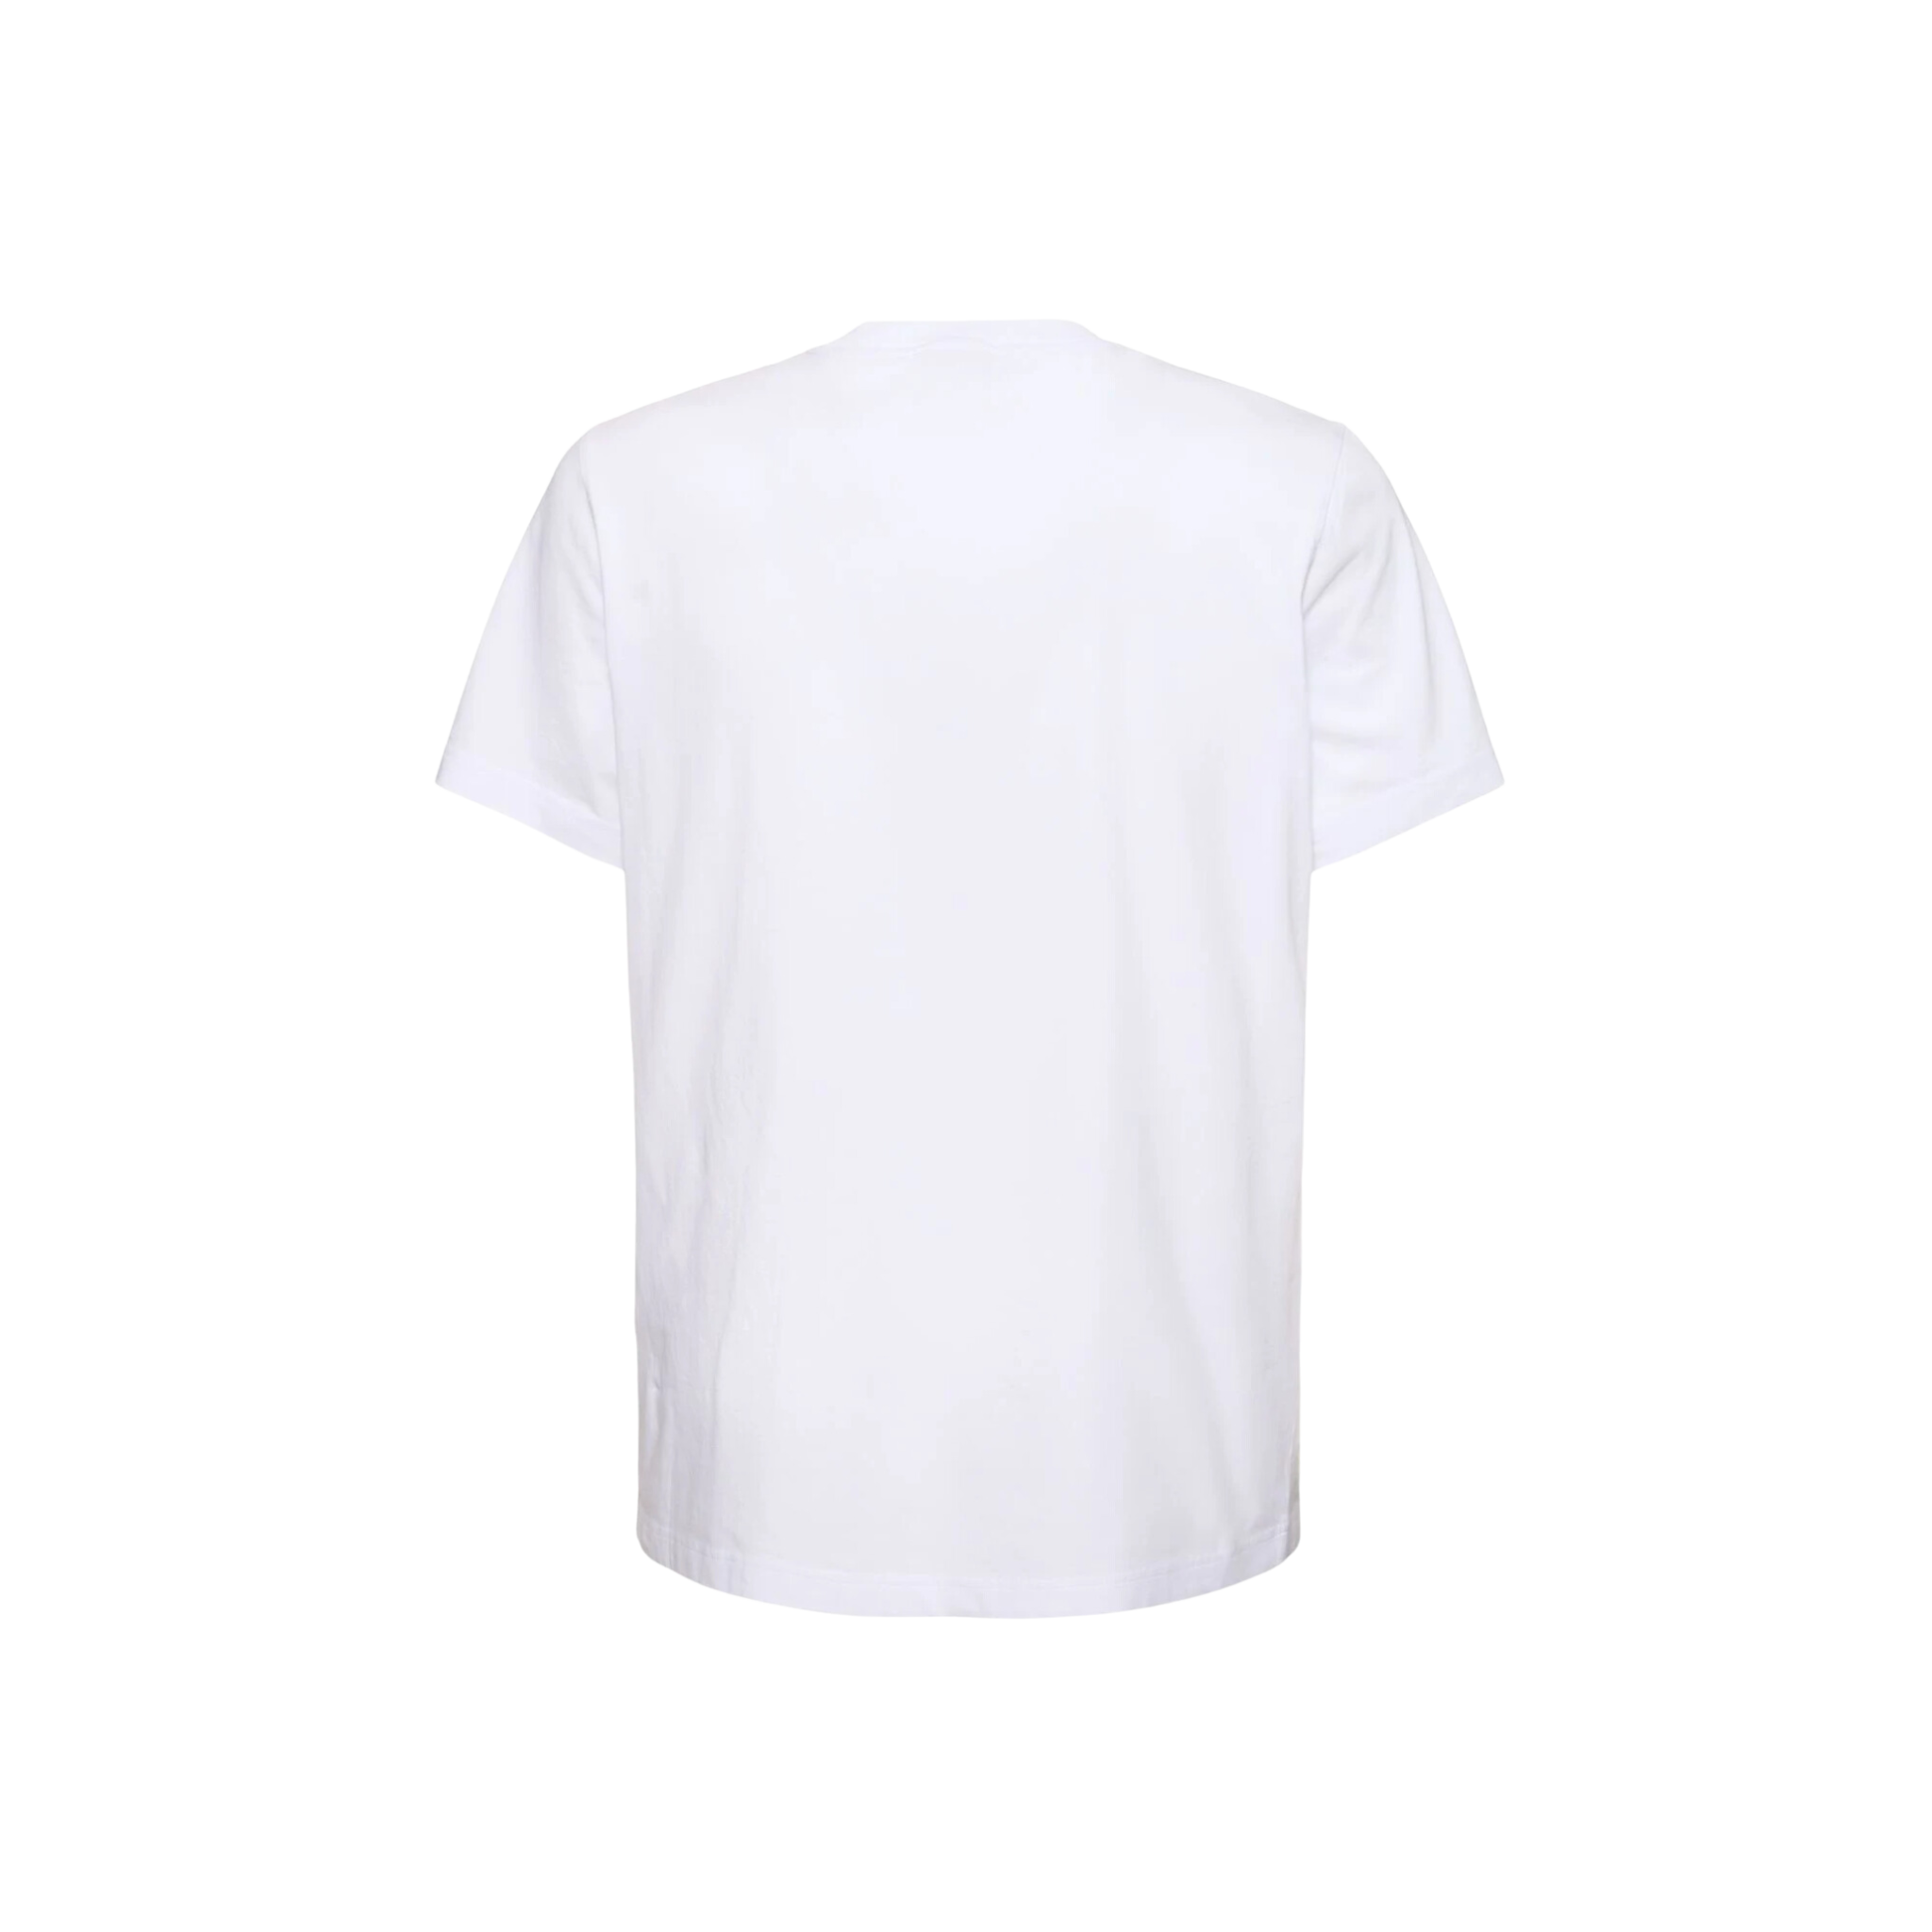 Moncler Main Logo Cotton T-shirt White